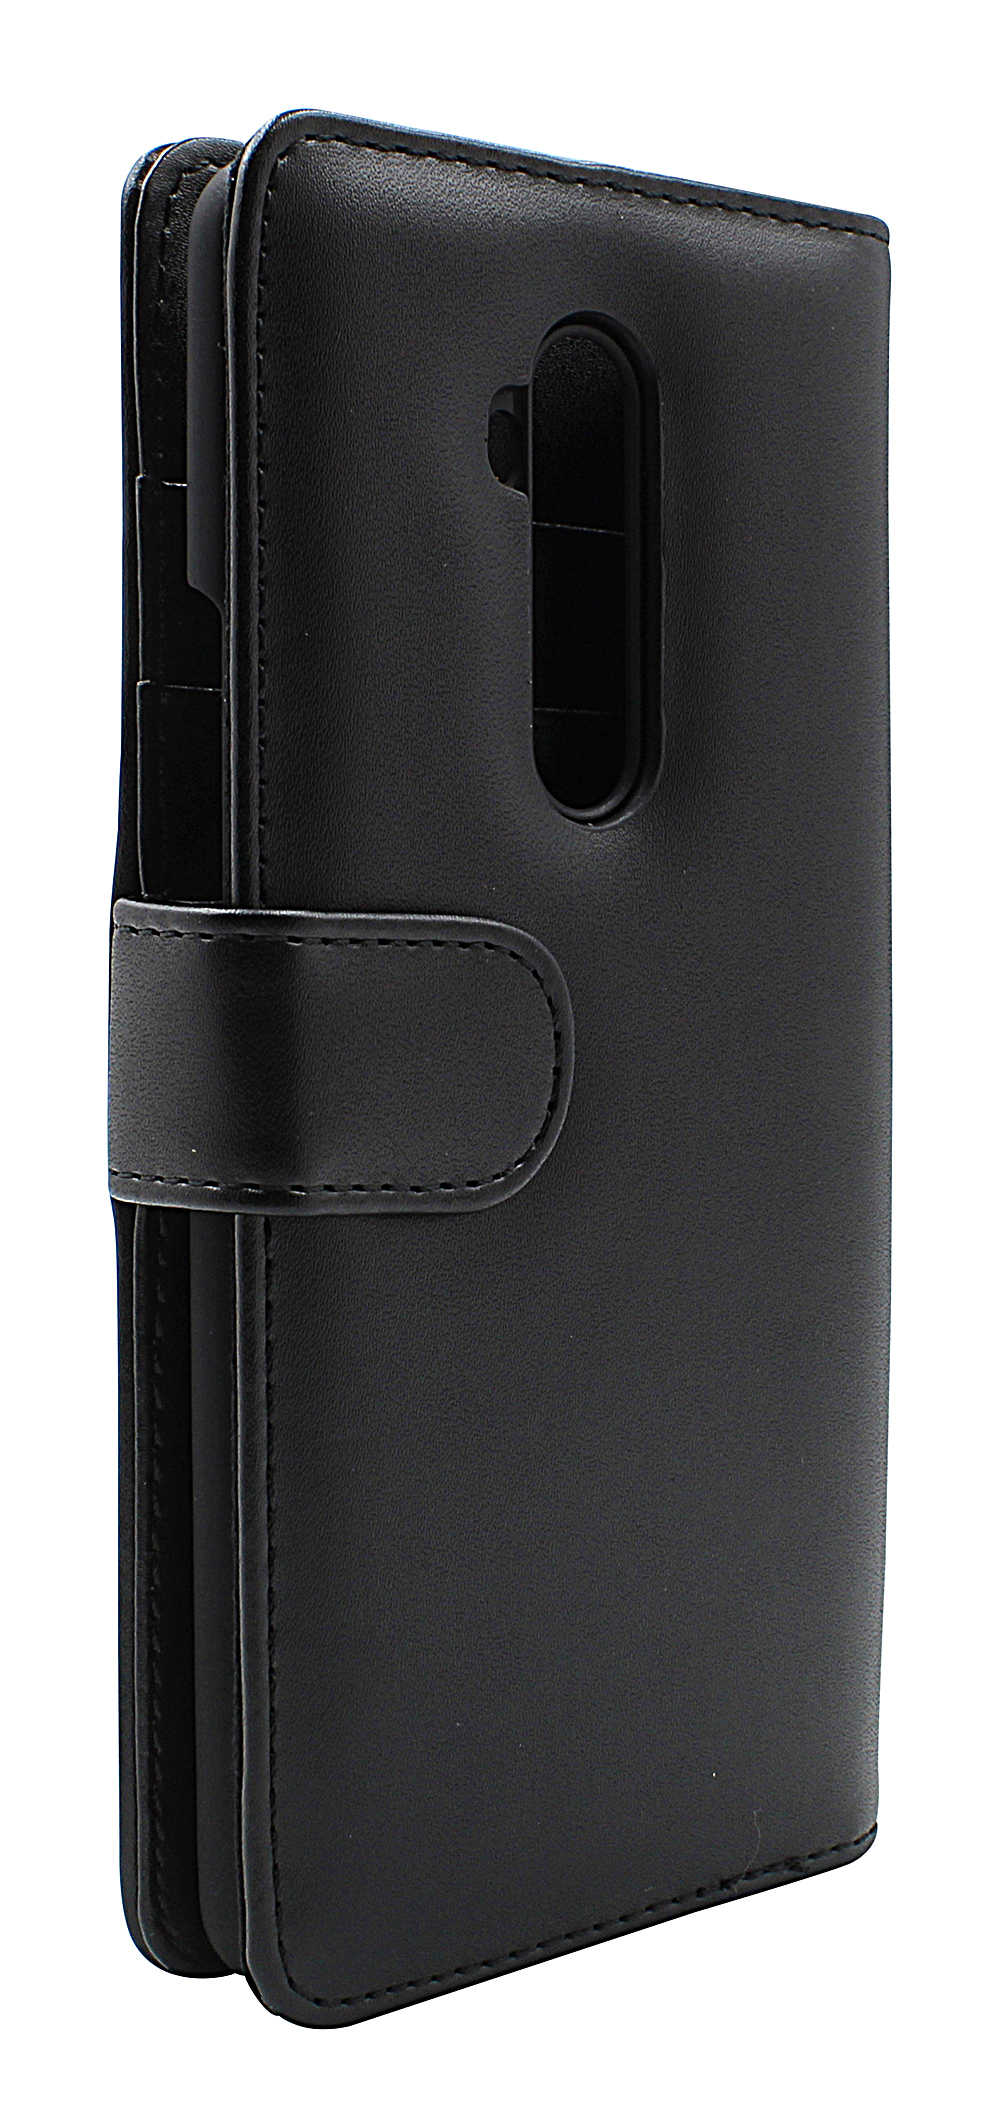 Skimblocker Lommebok-etui OnePlus 7T Pro